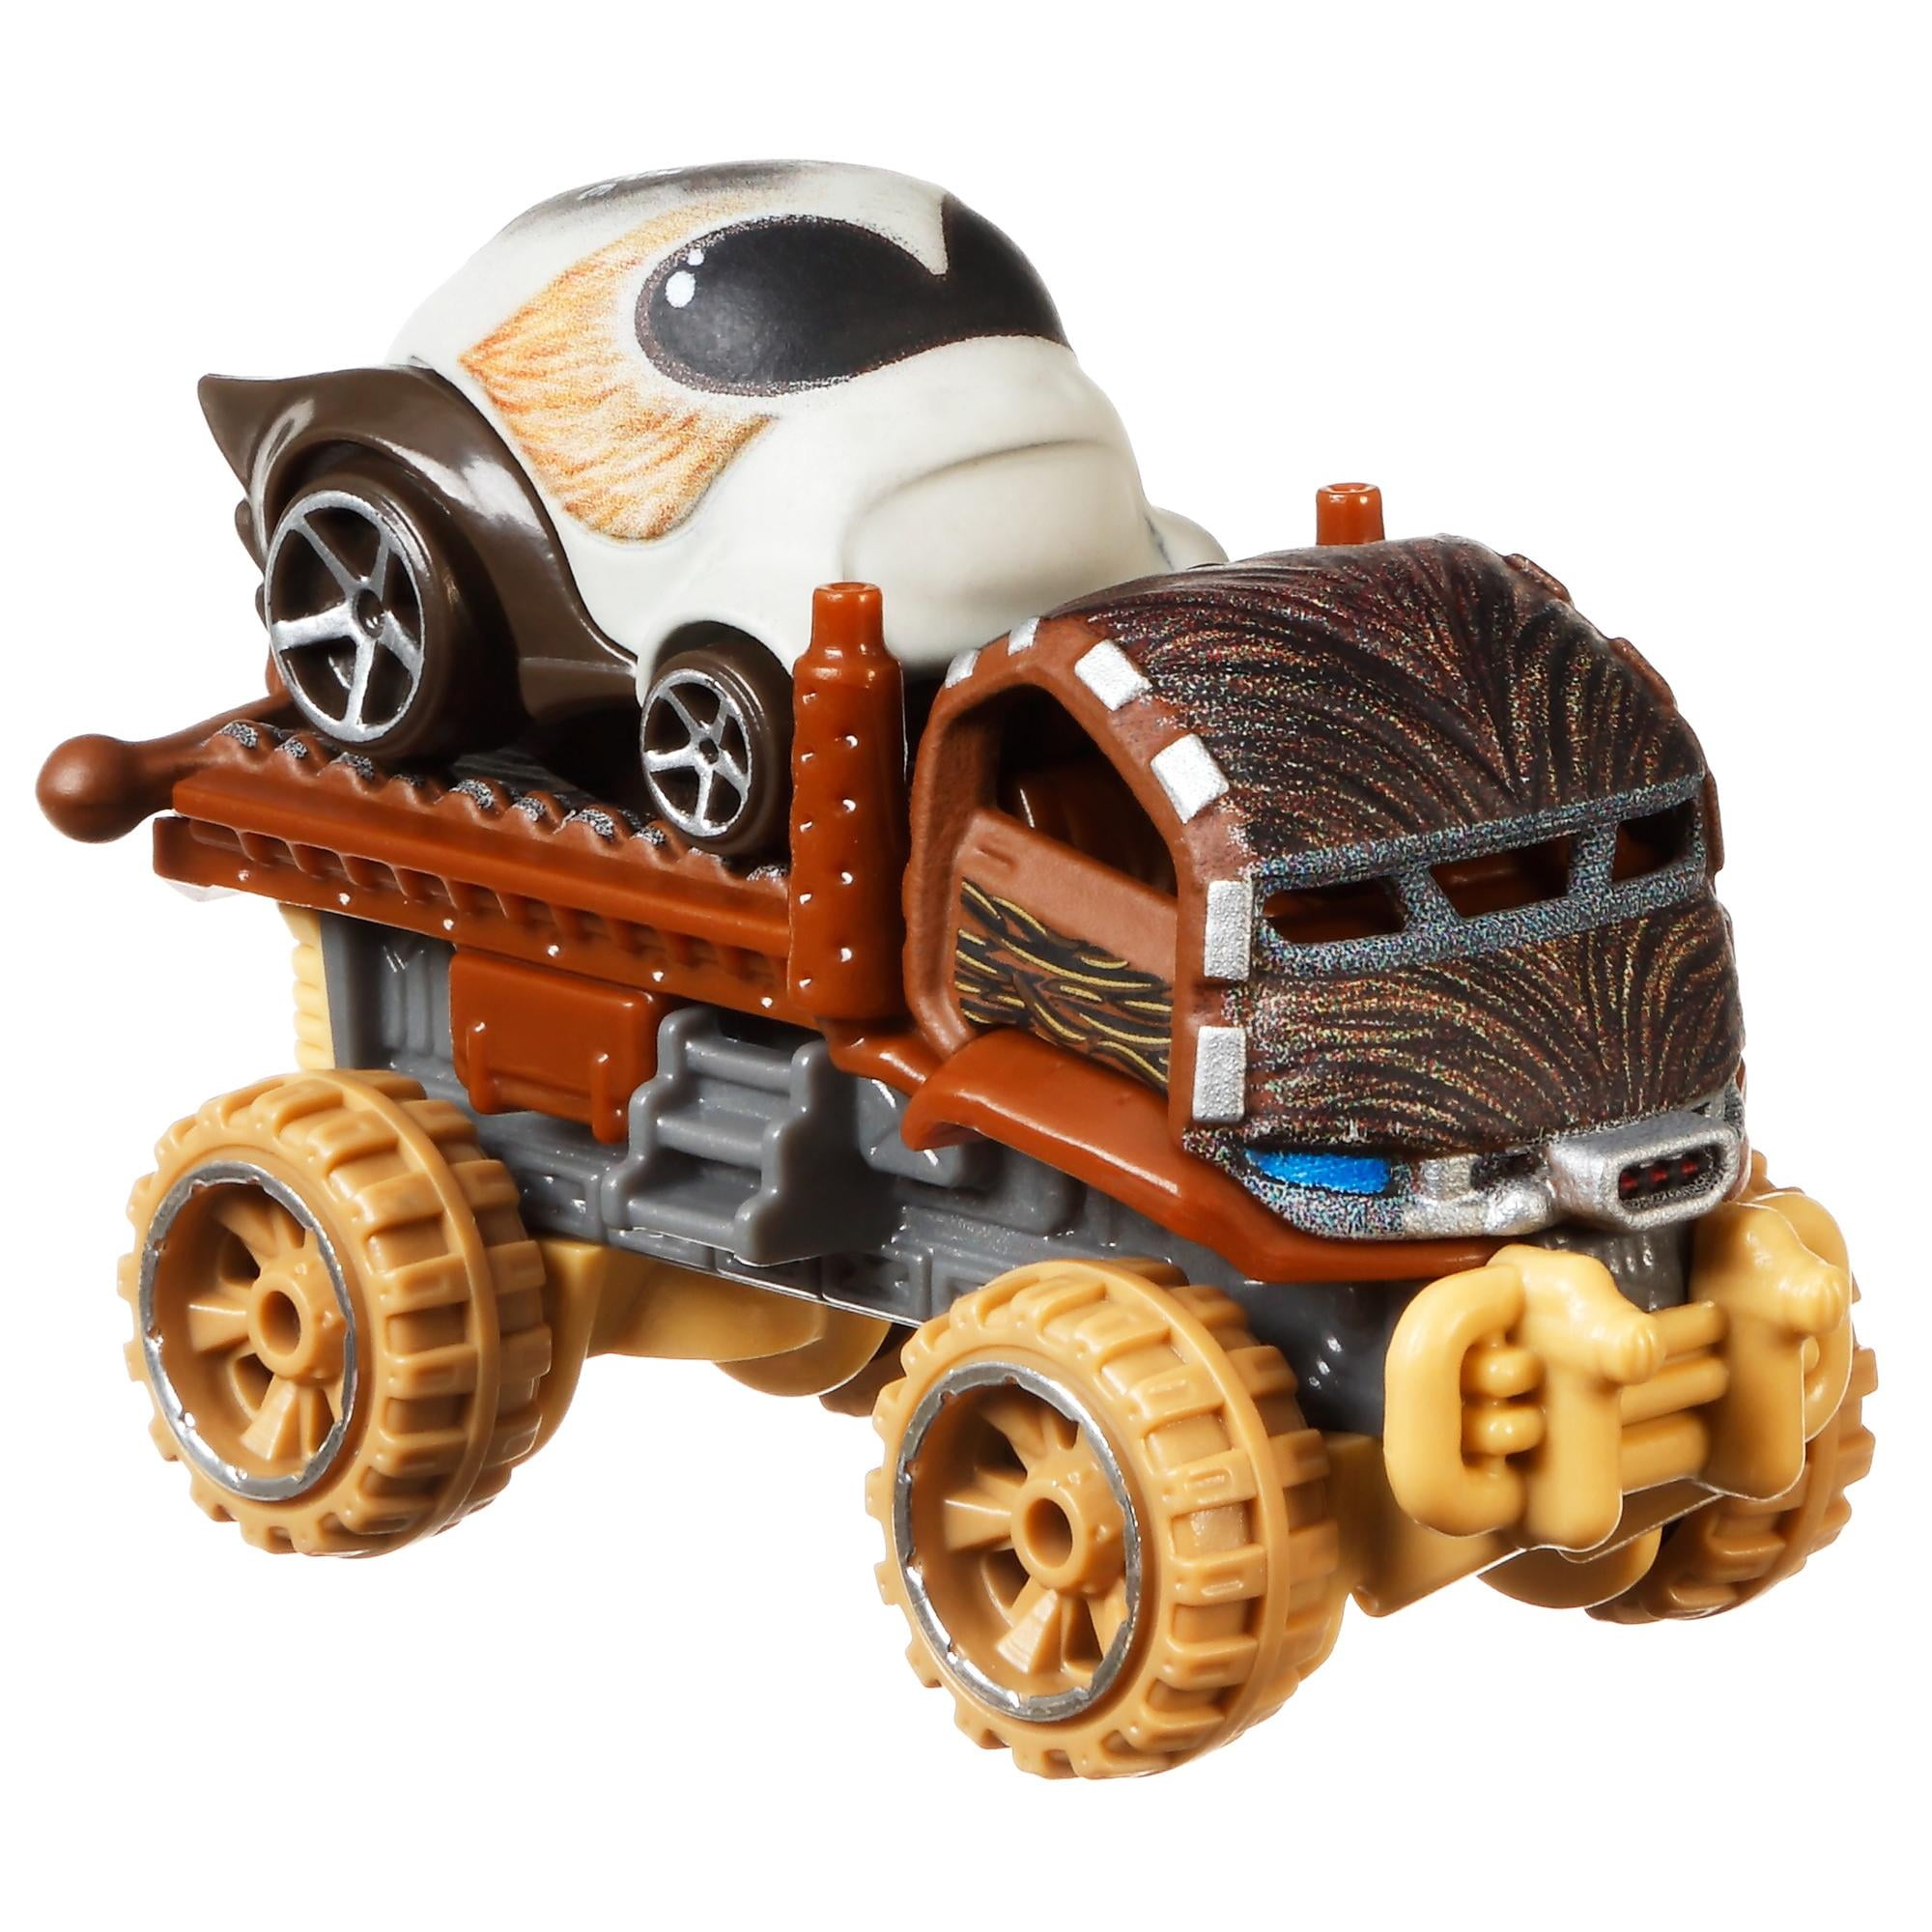 Hot Wheels Character Cars Chewbacca Star Wars All-Terrain Die-cast 